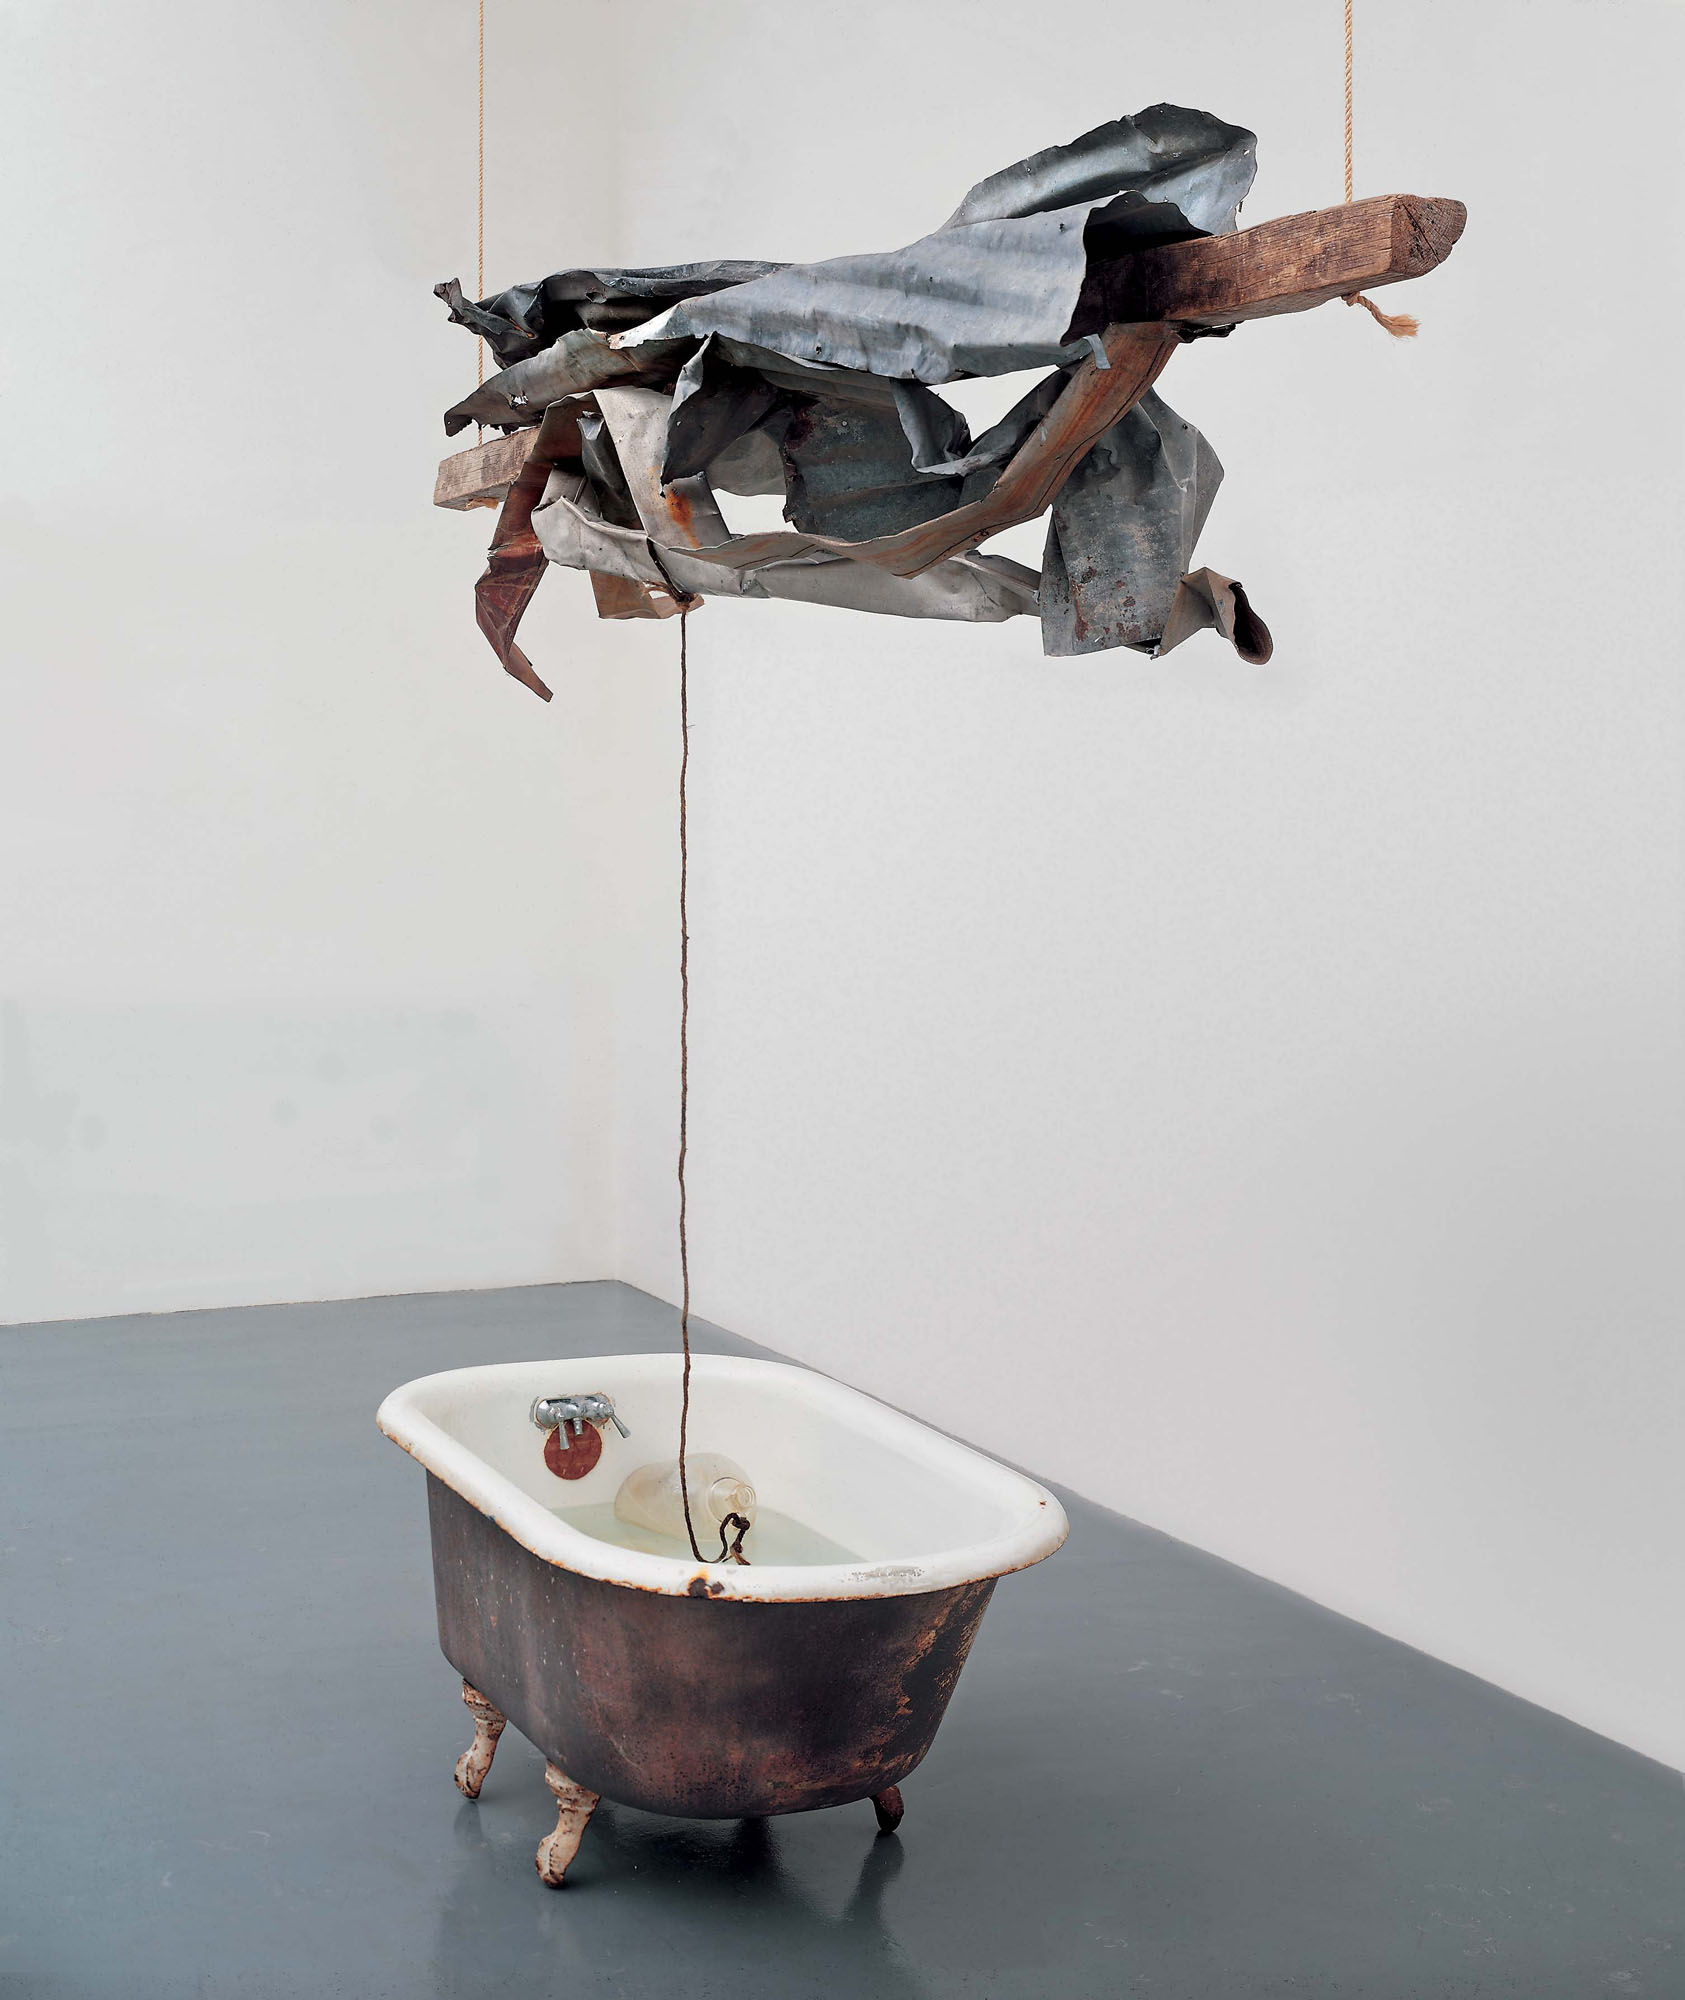 © Rauschenberg Foundation Sor Aqua (Venetian) 1973. Water-filled bathtub, wood, metal, rope, and glass jug, 98 x 120 x 41 inches (248.9 x 304.8 x 104.1 cm), The Museum of Fine Arts, Houston